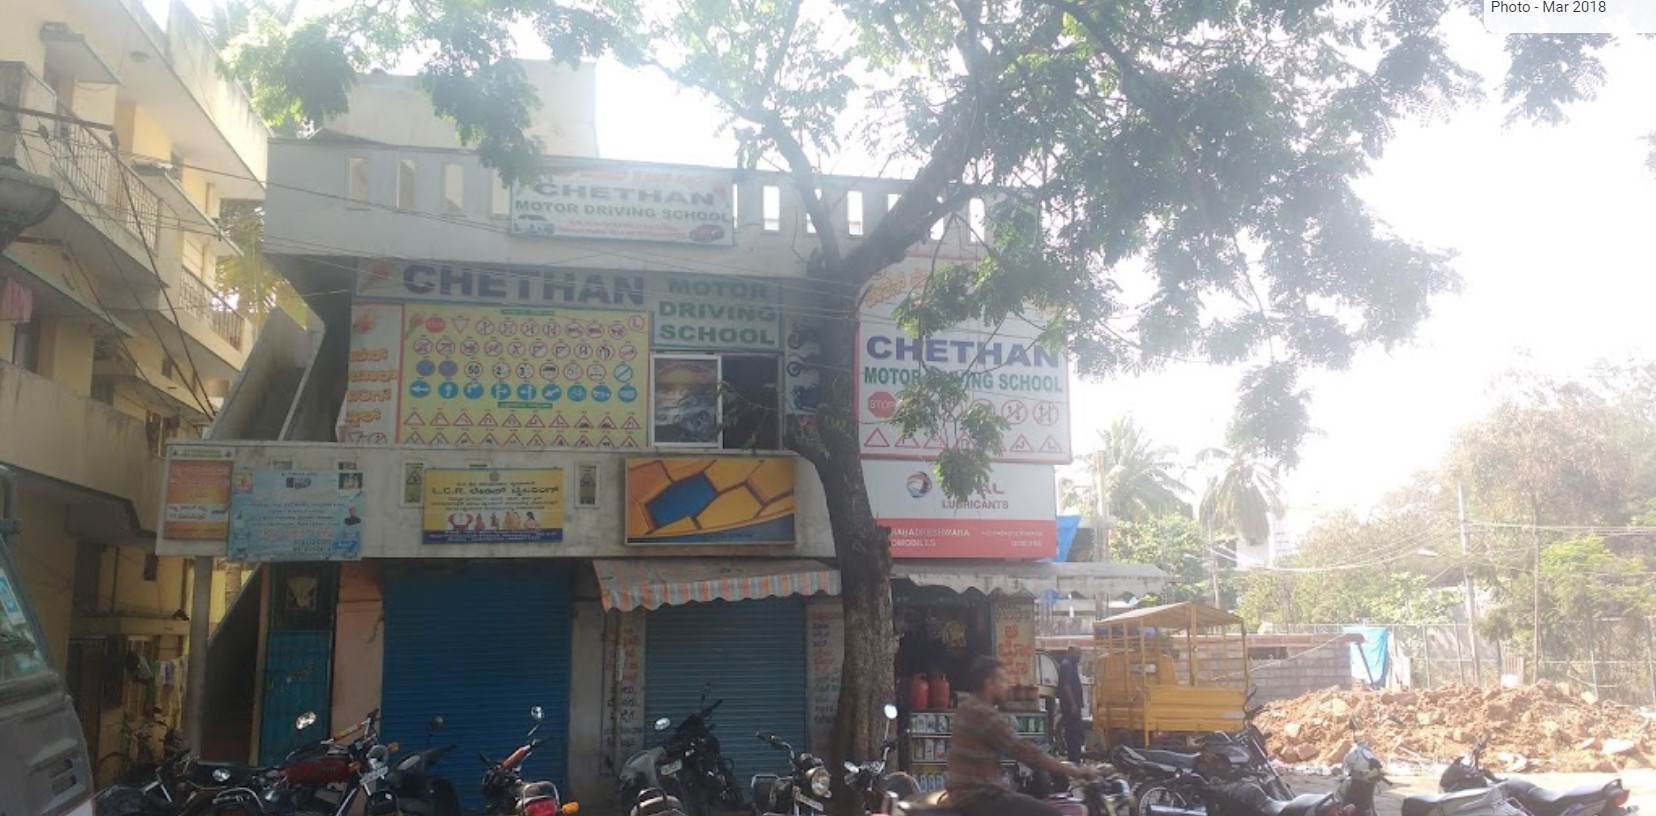 Chethan Motor Driving School in Rajajinagar